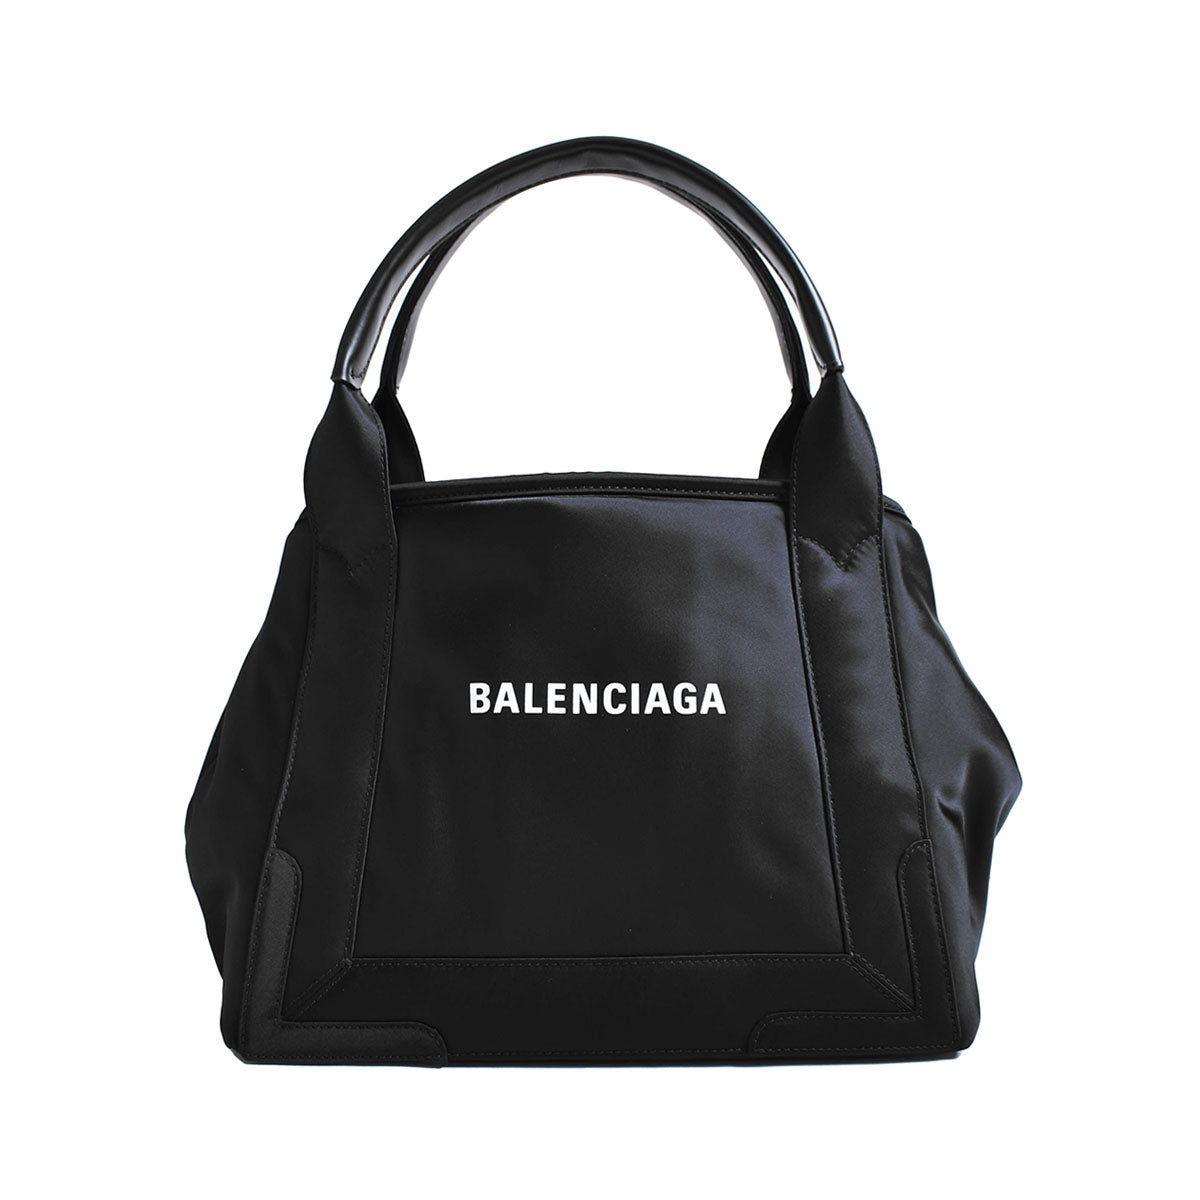 BALENCIAGA (バレンシアガ) - R&Co. 公式通販